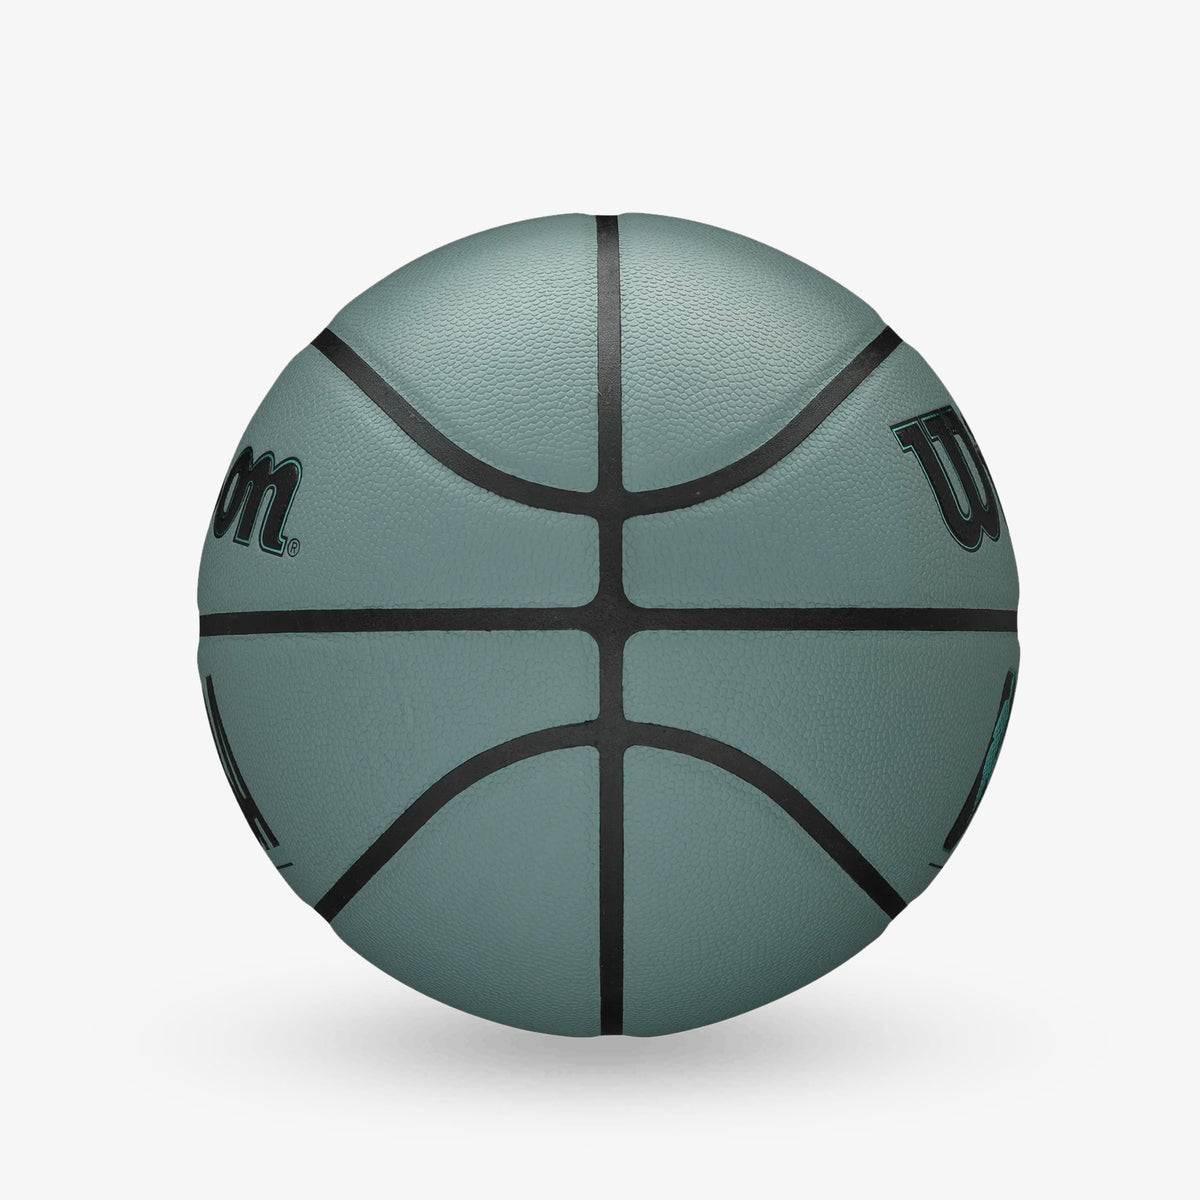 NBA Forge Basketball - Light Grey - Size 6